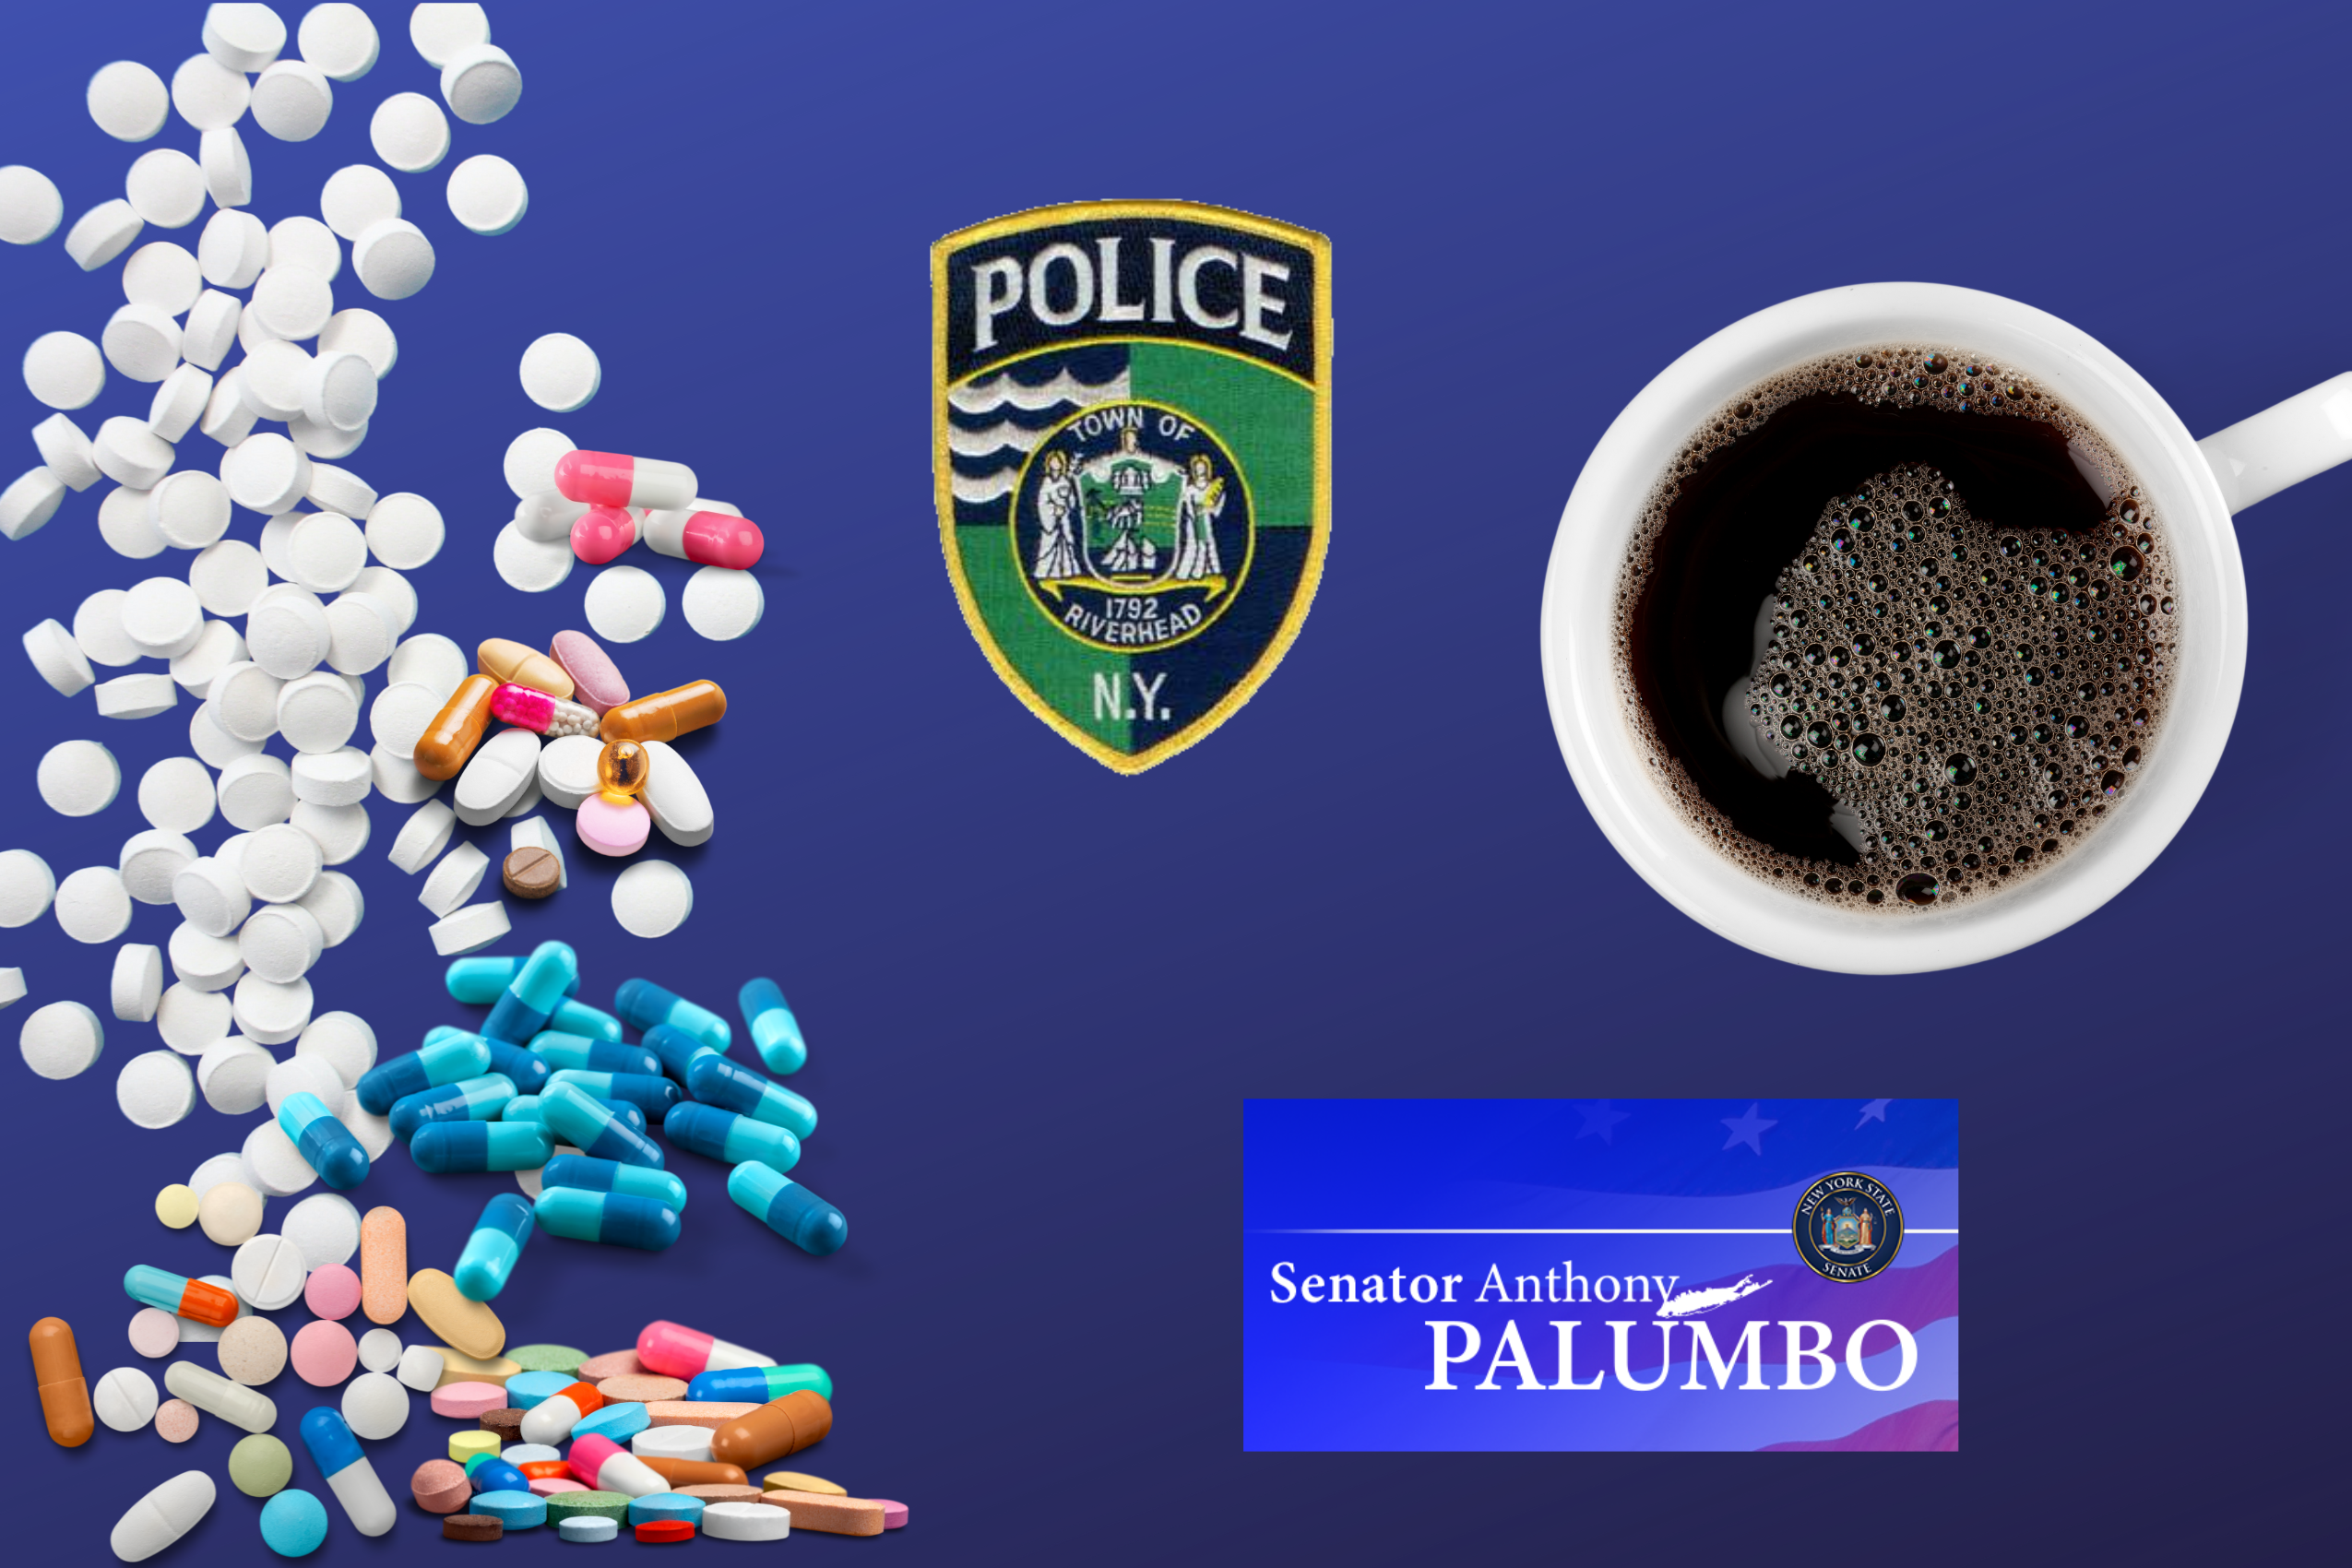 medications, riverhead police emblem, senator anthony palumbo logo, cup of coffee on blue background